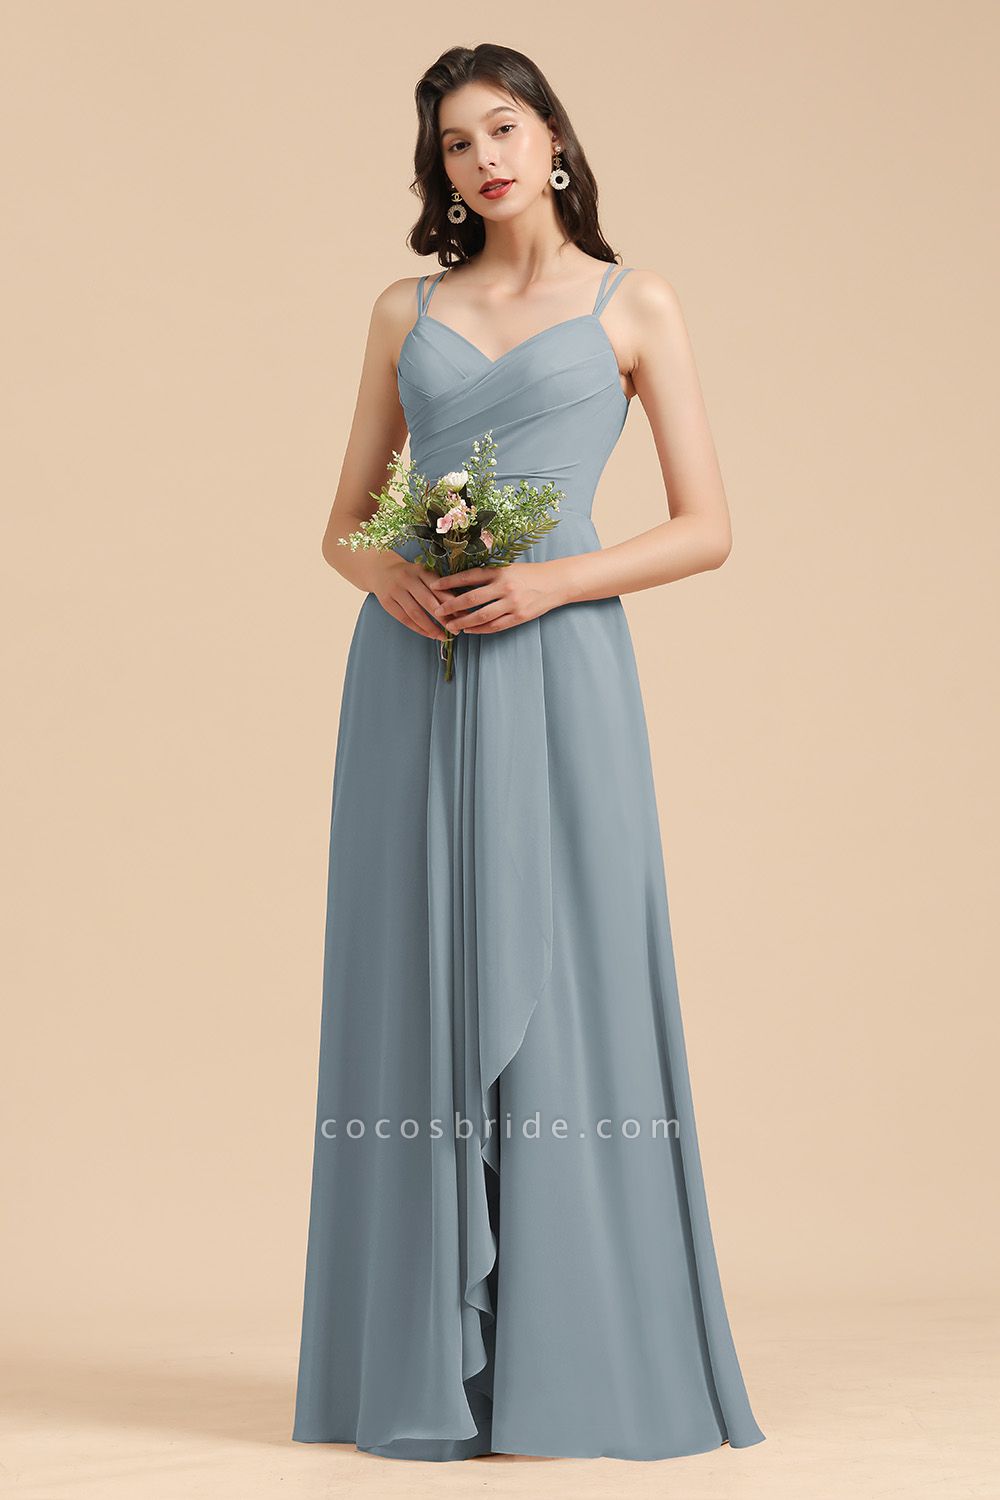 Long A-line V-Neck Chiffon Bridesmaid Dress Dusty Blue Wedding Guest Dress